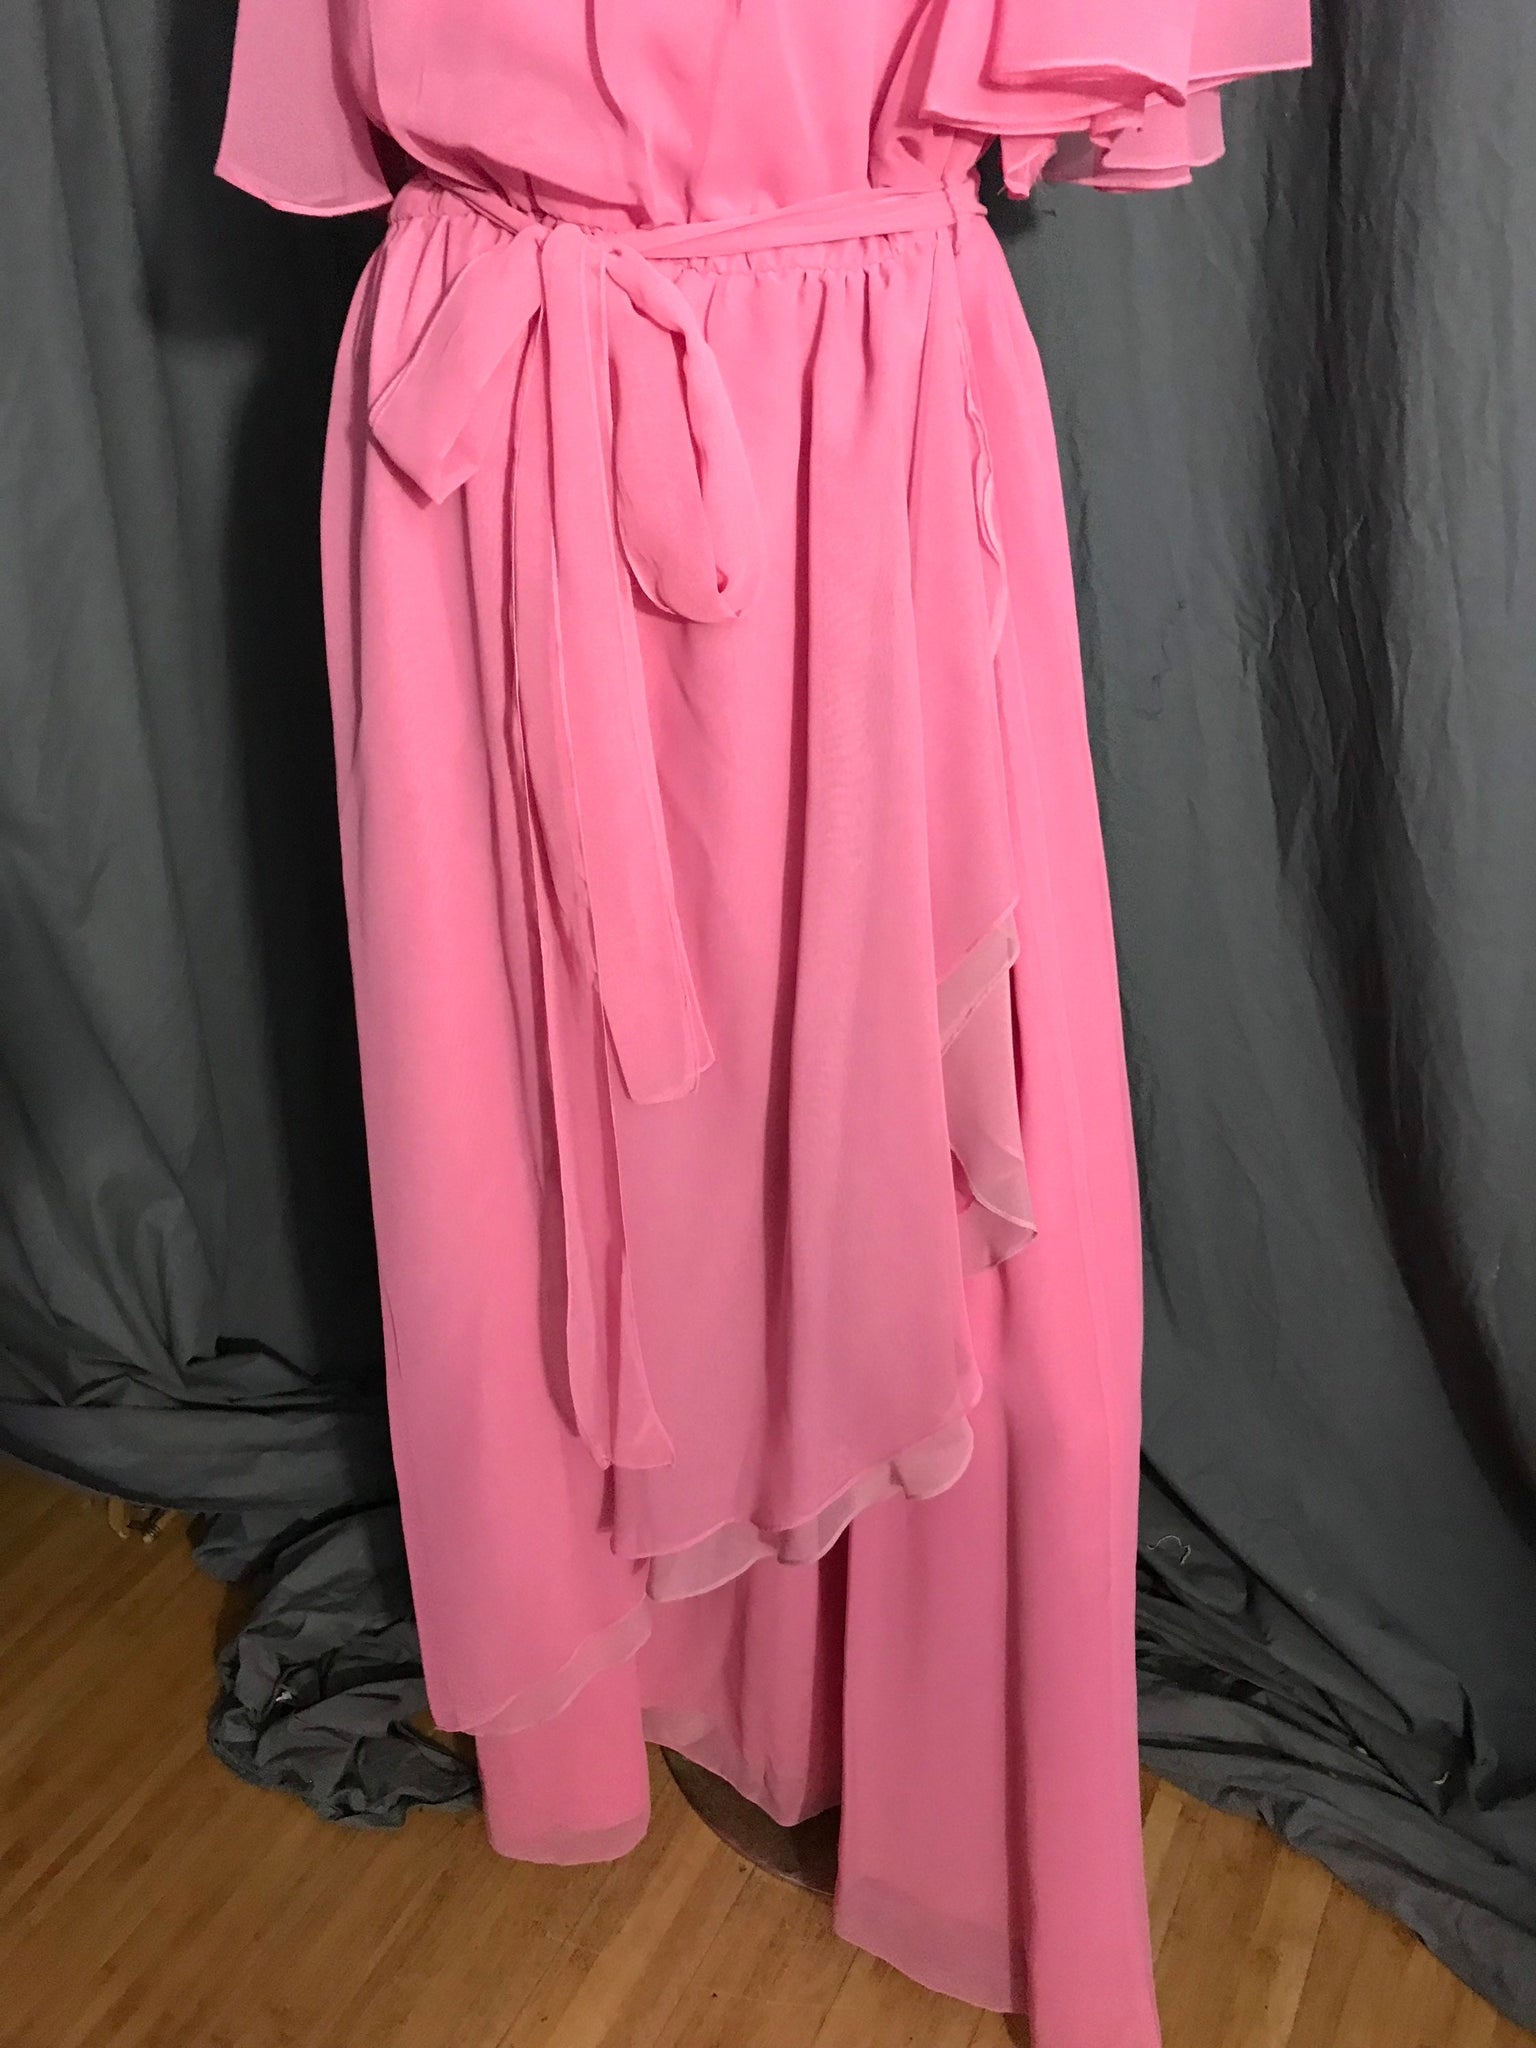 Vintage volup pink 70's chiffon formal dress L